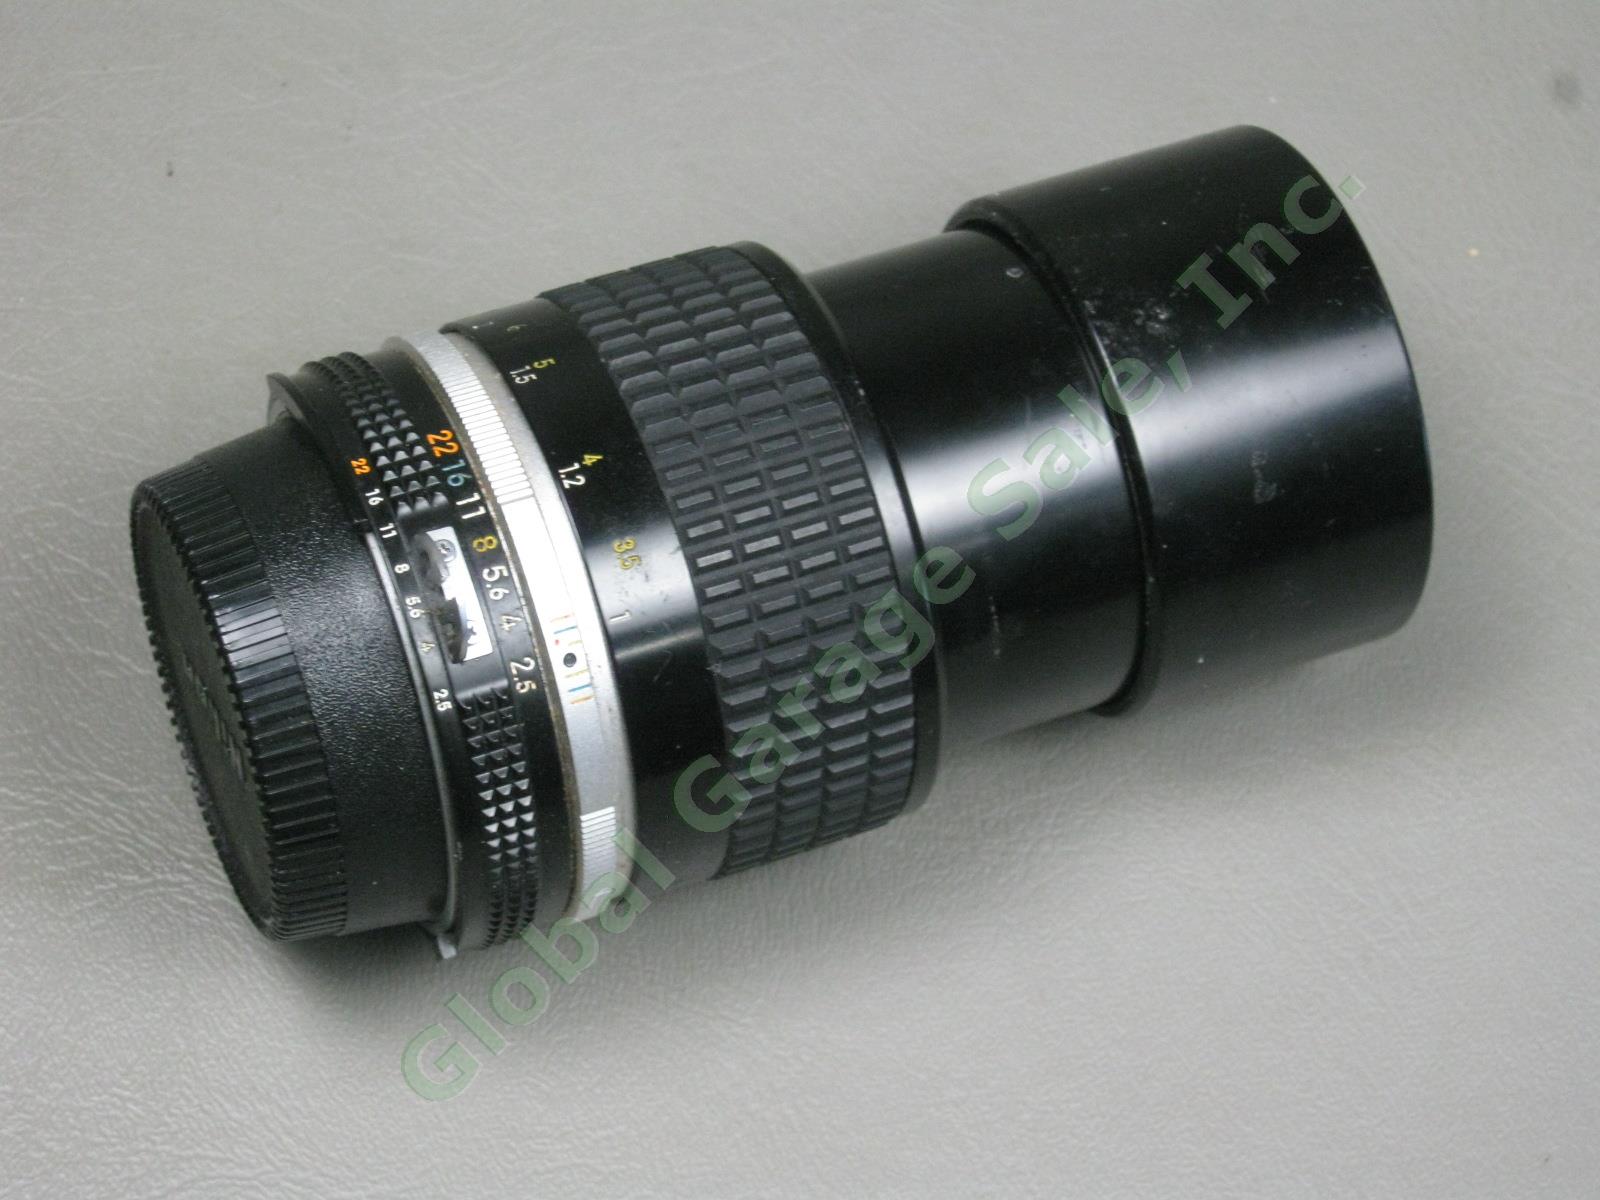 Nikon Nikkor 105mm 1:2.5 f/2.5 Telephoto Camera Lens No Reserve Price! 5